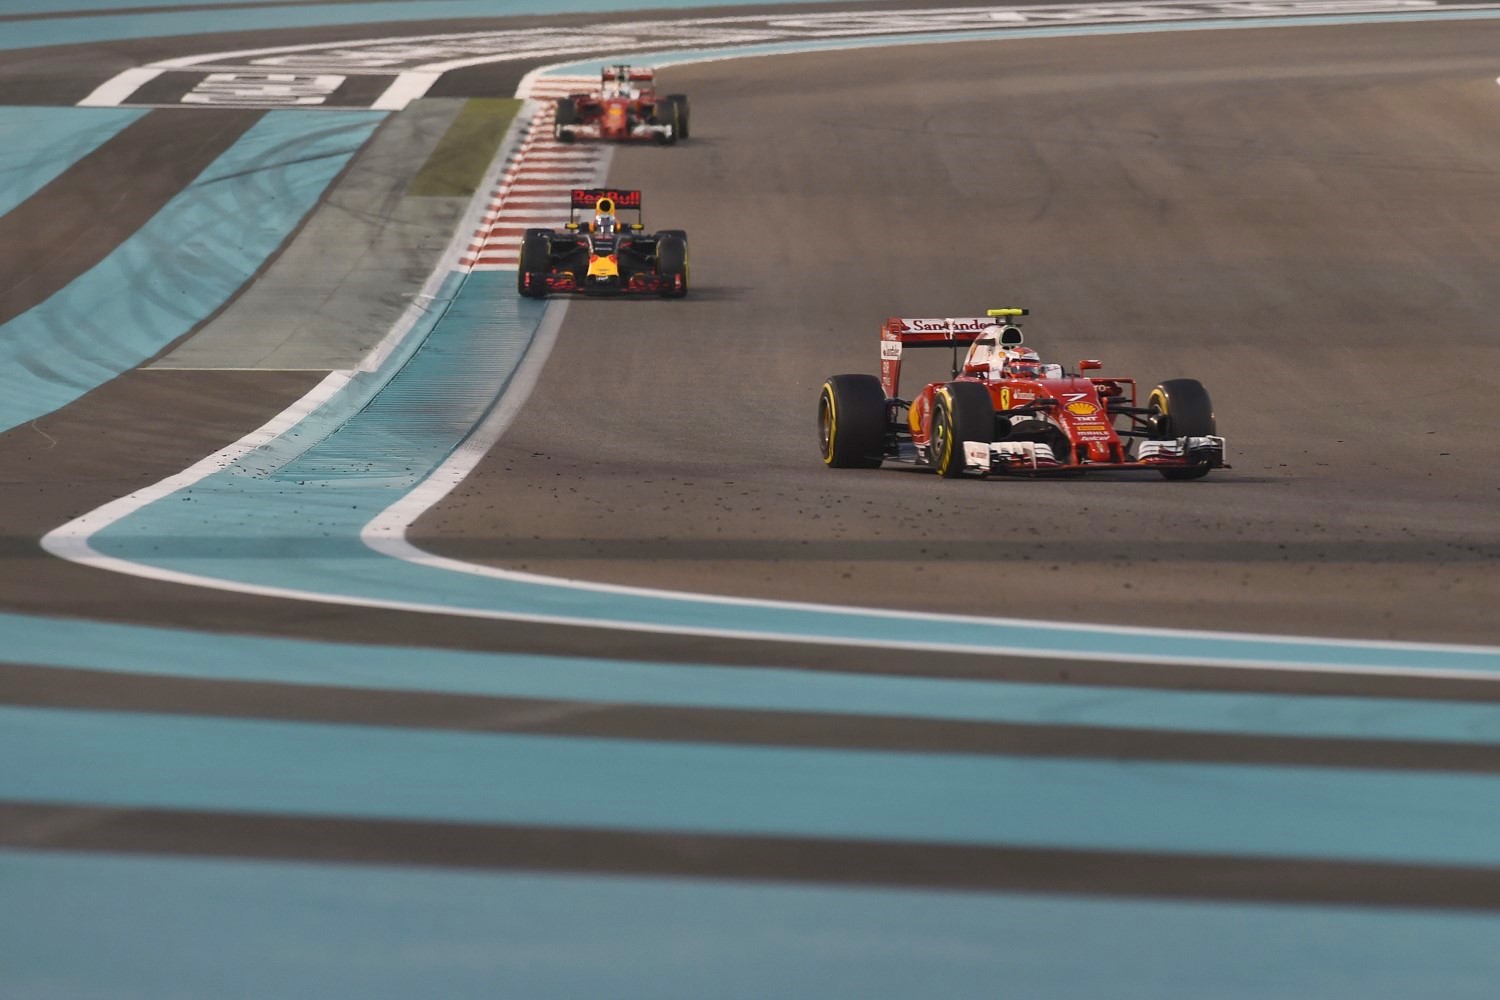 Raikkonen leads Ricciardo and Vettel in Abu Dhabi. Vettel would eventually beat them both